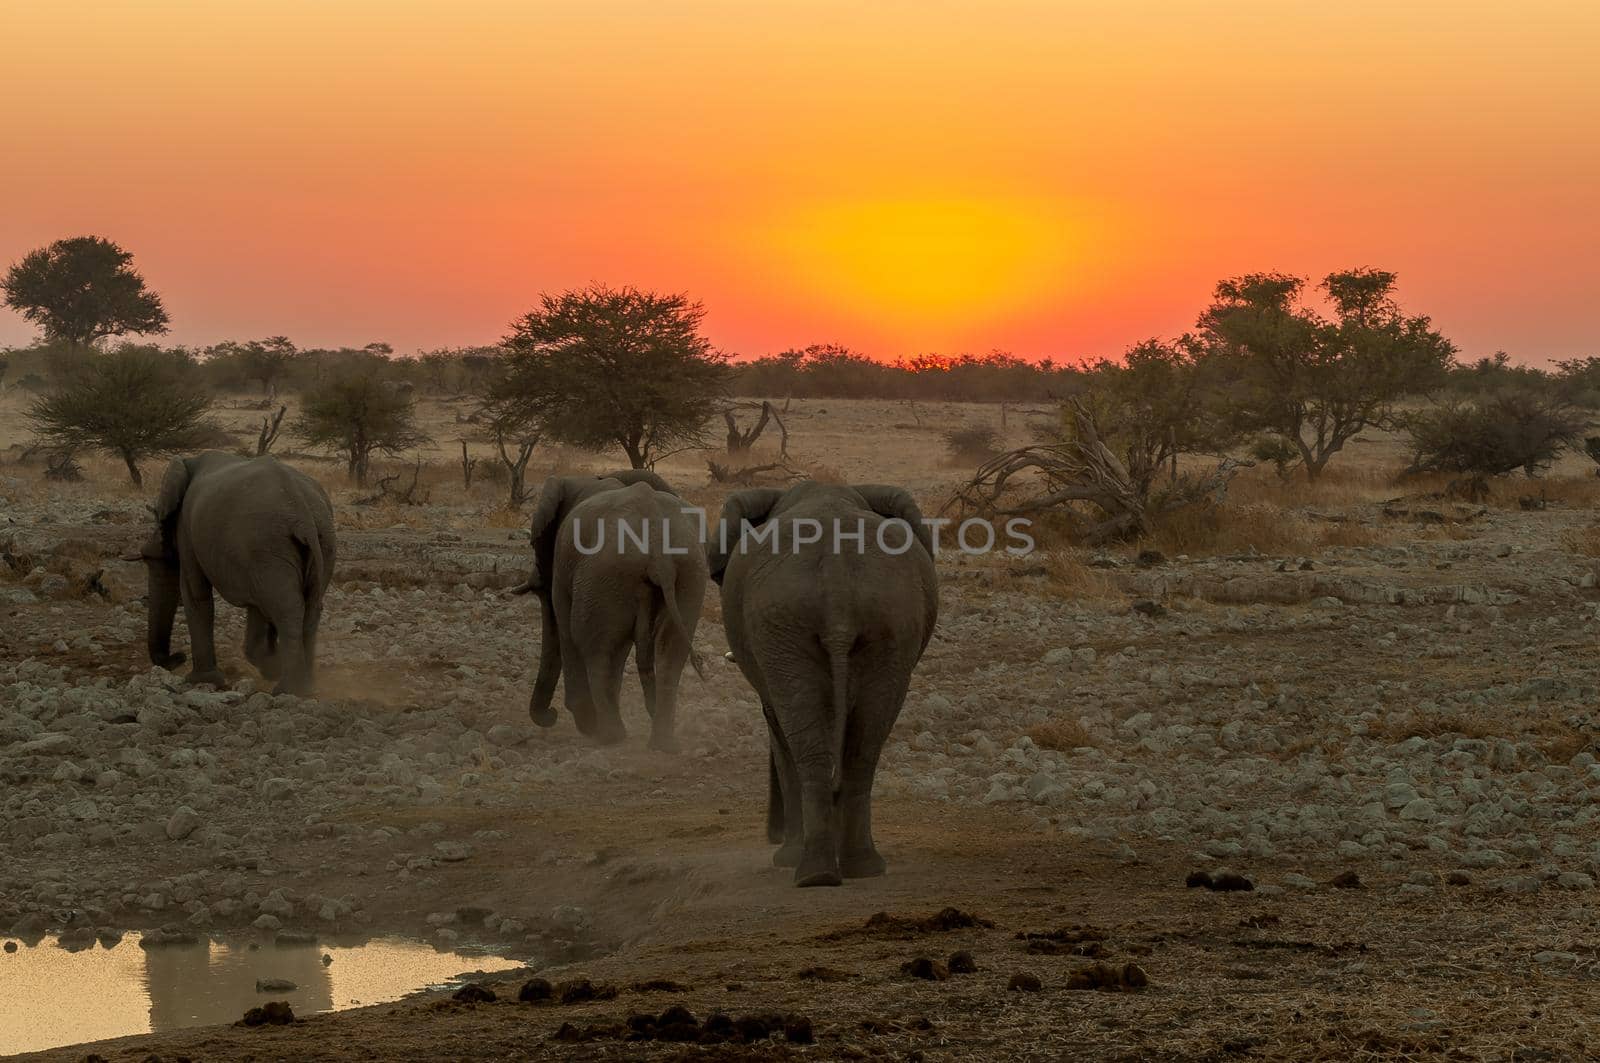 African elephants with sunset backdrop at the Okaukeujo waterhole by dpreezg